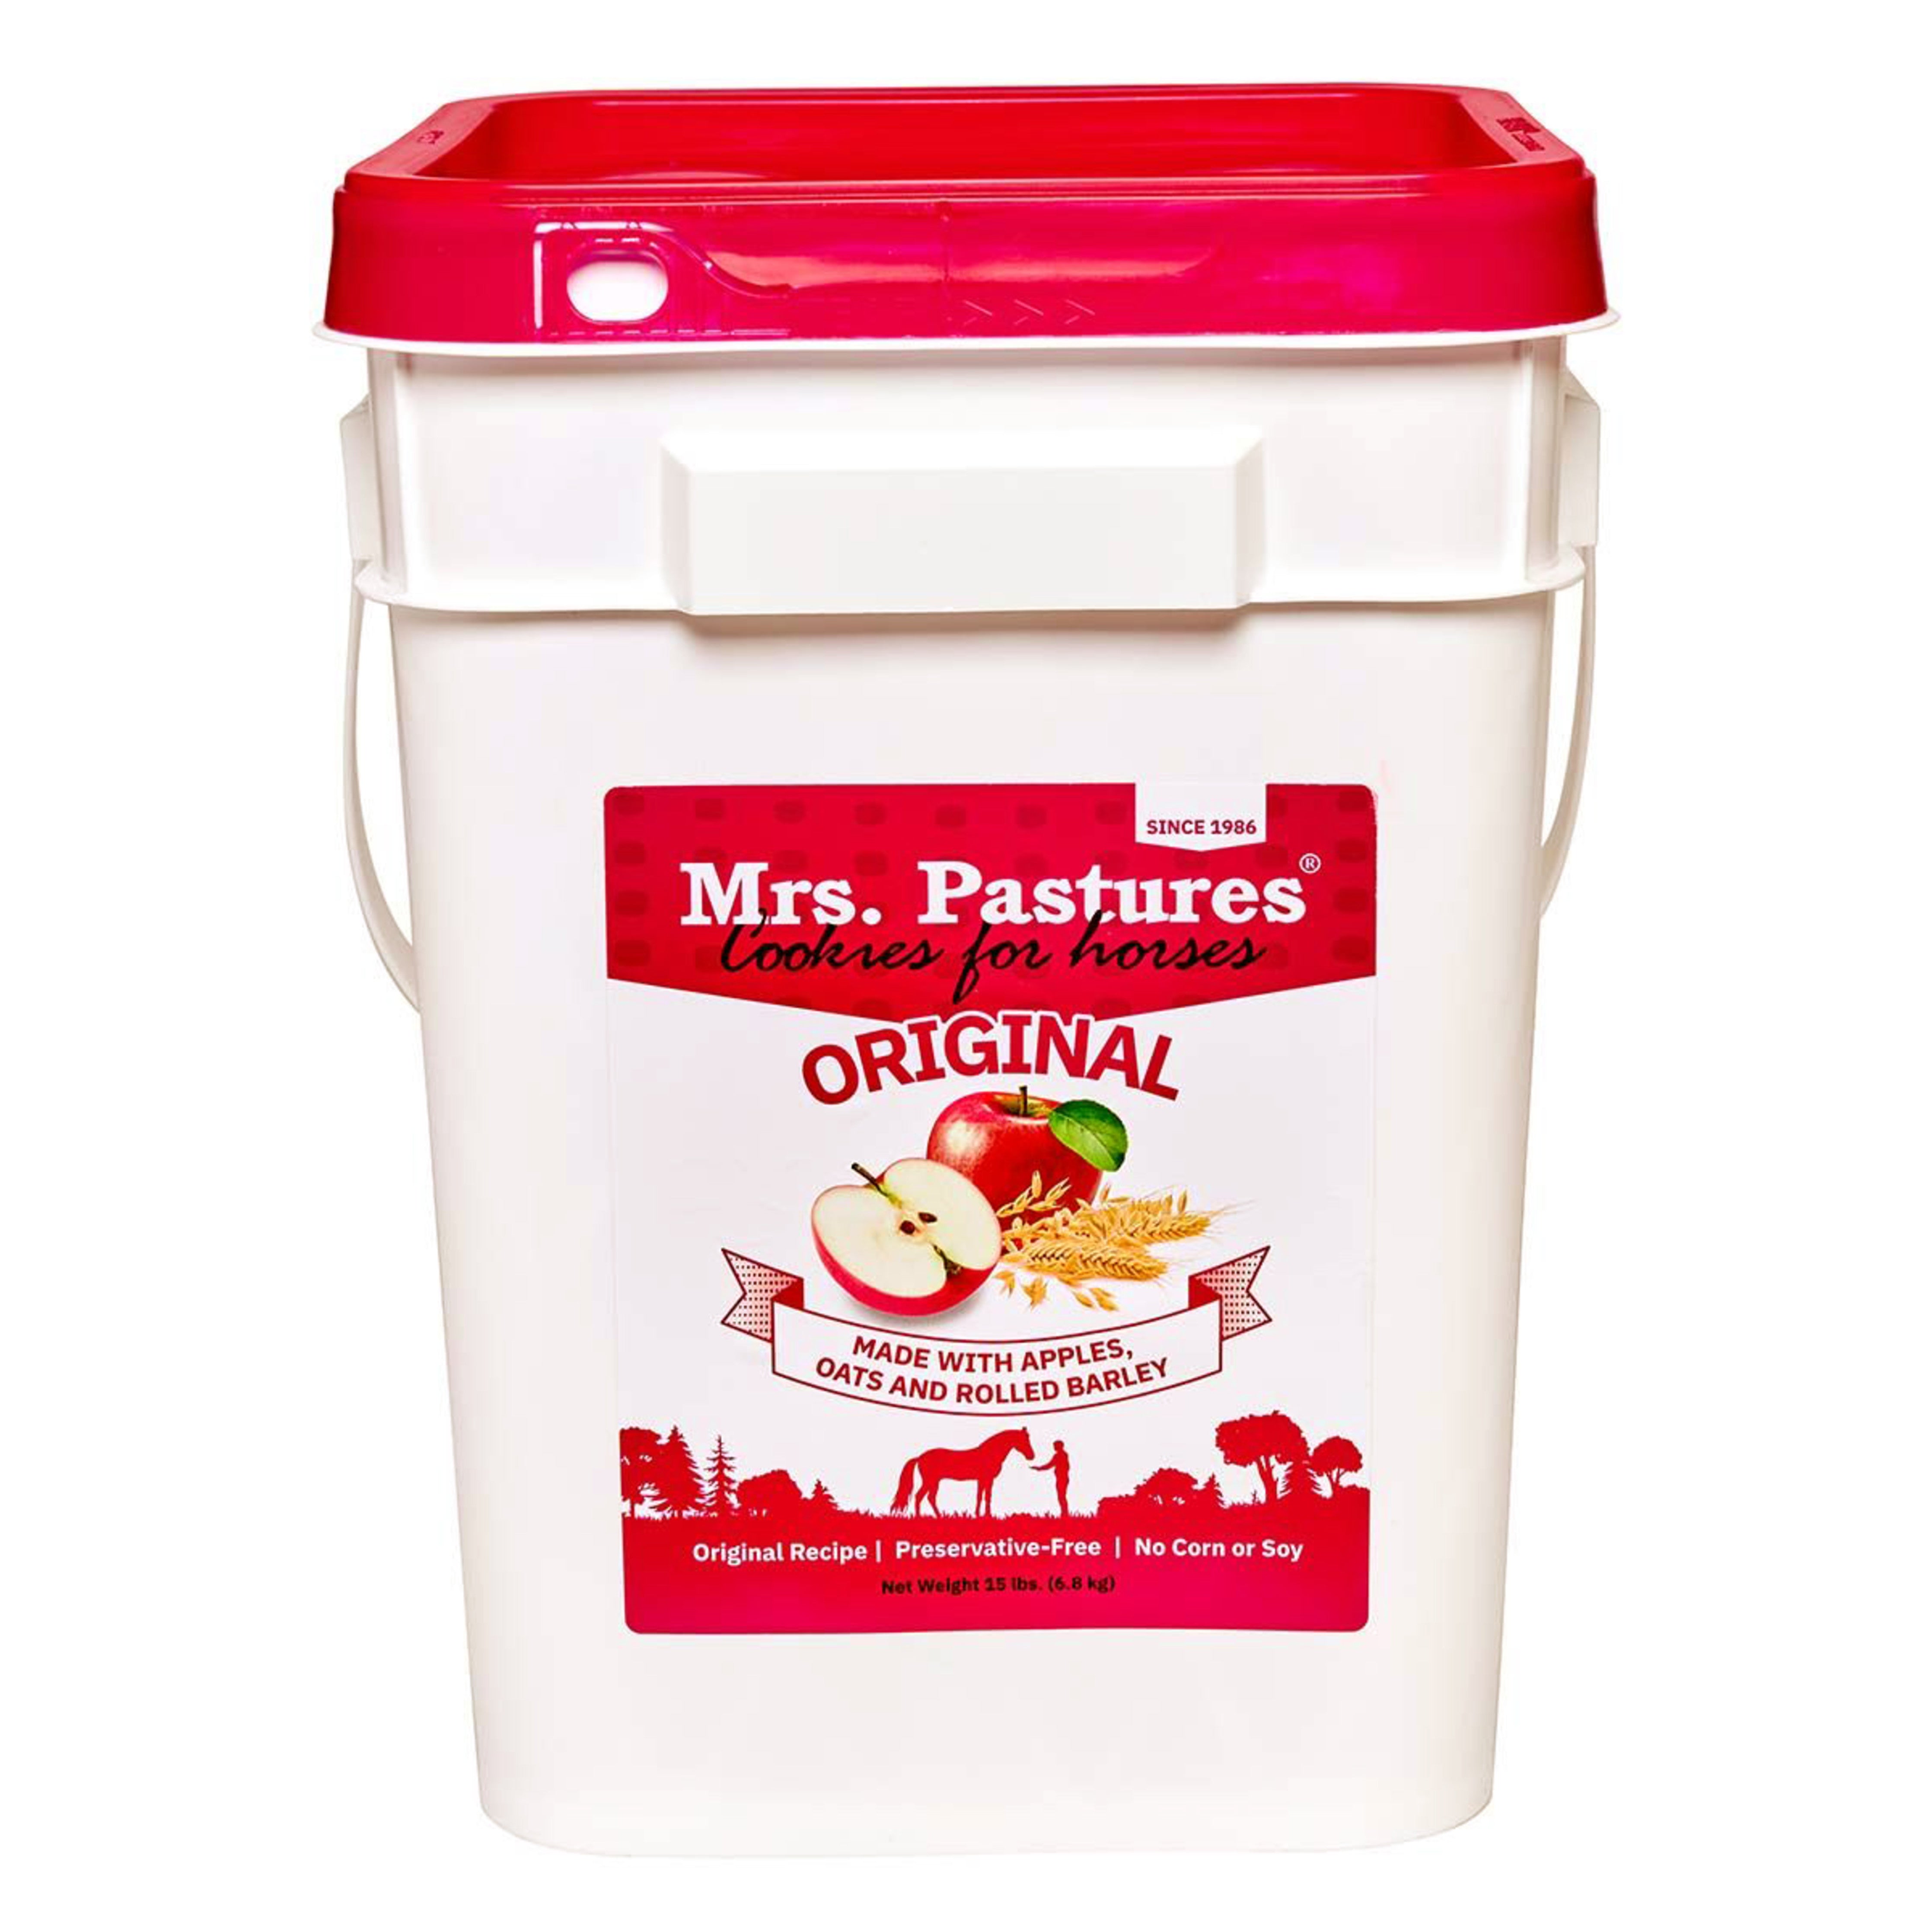 Mrs Pastures Original 15 lb pail